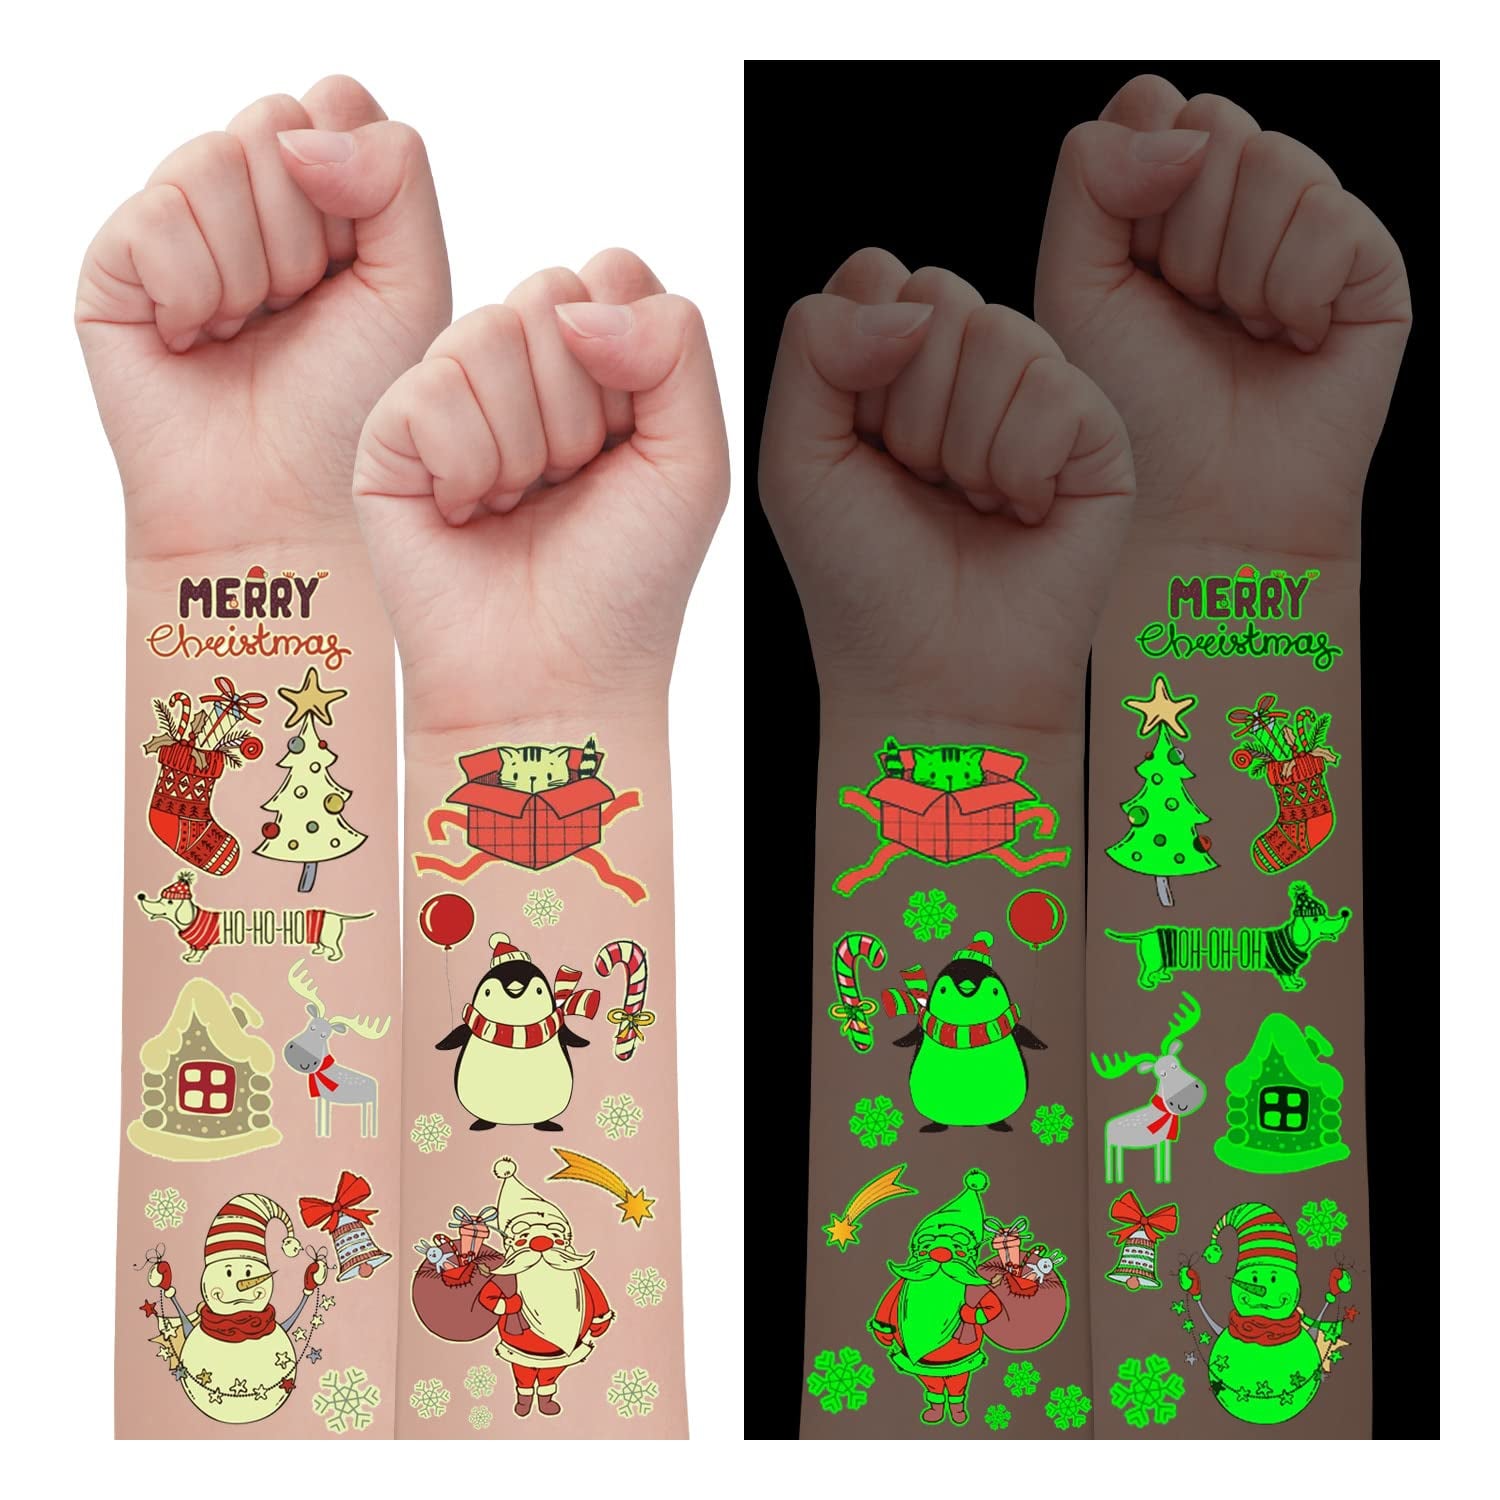 45 Christmas Tattoos To Make Your Holiday More Memorable  Blurmark  Christmas  tattoo Reindeer tattoo Disney tattoos